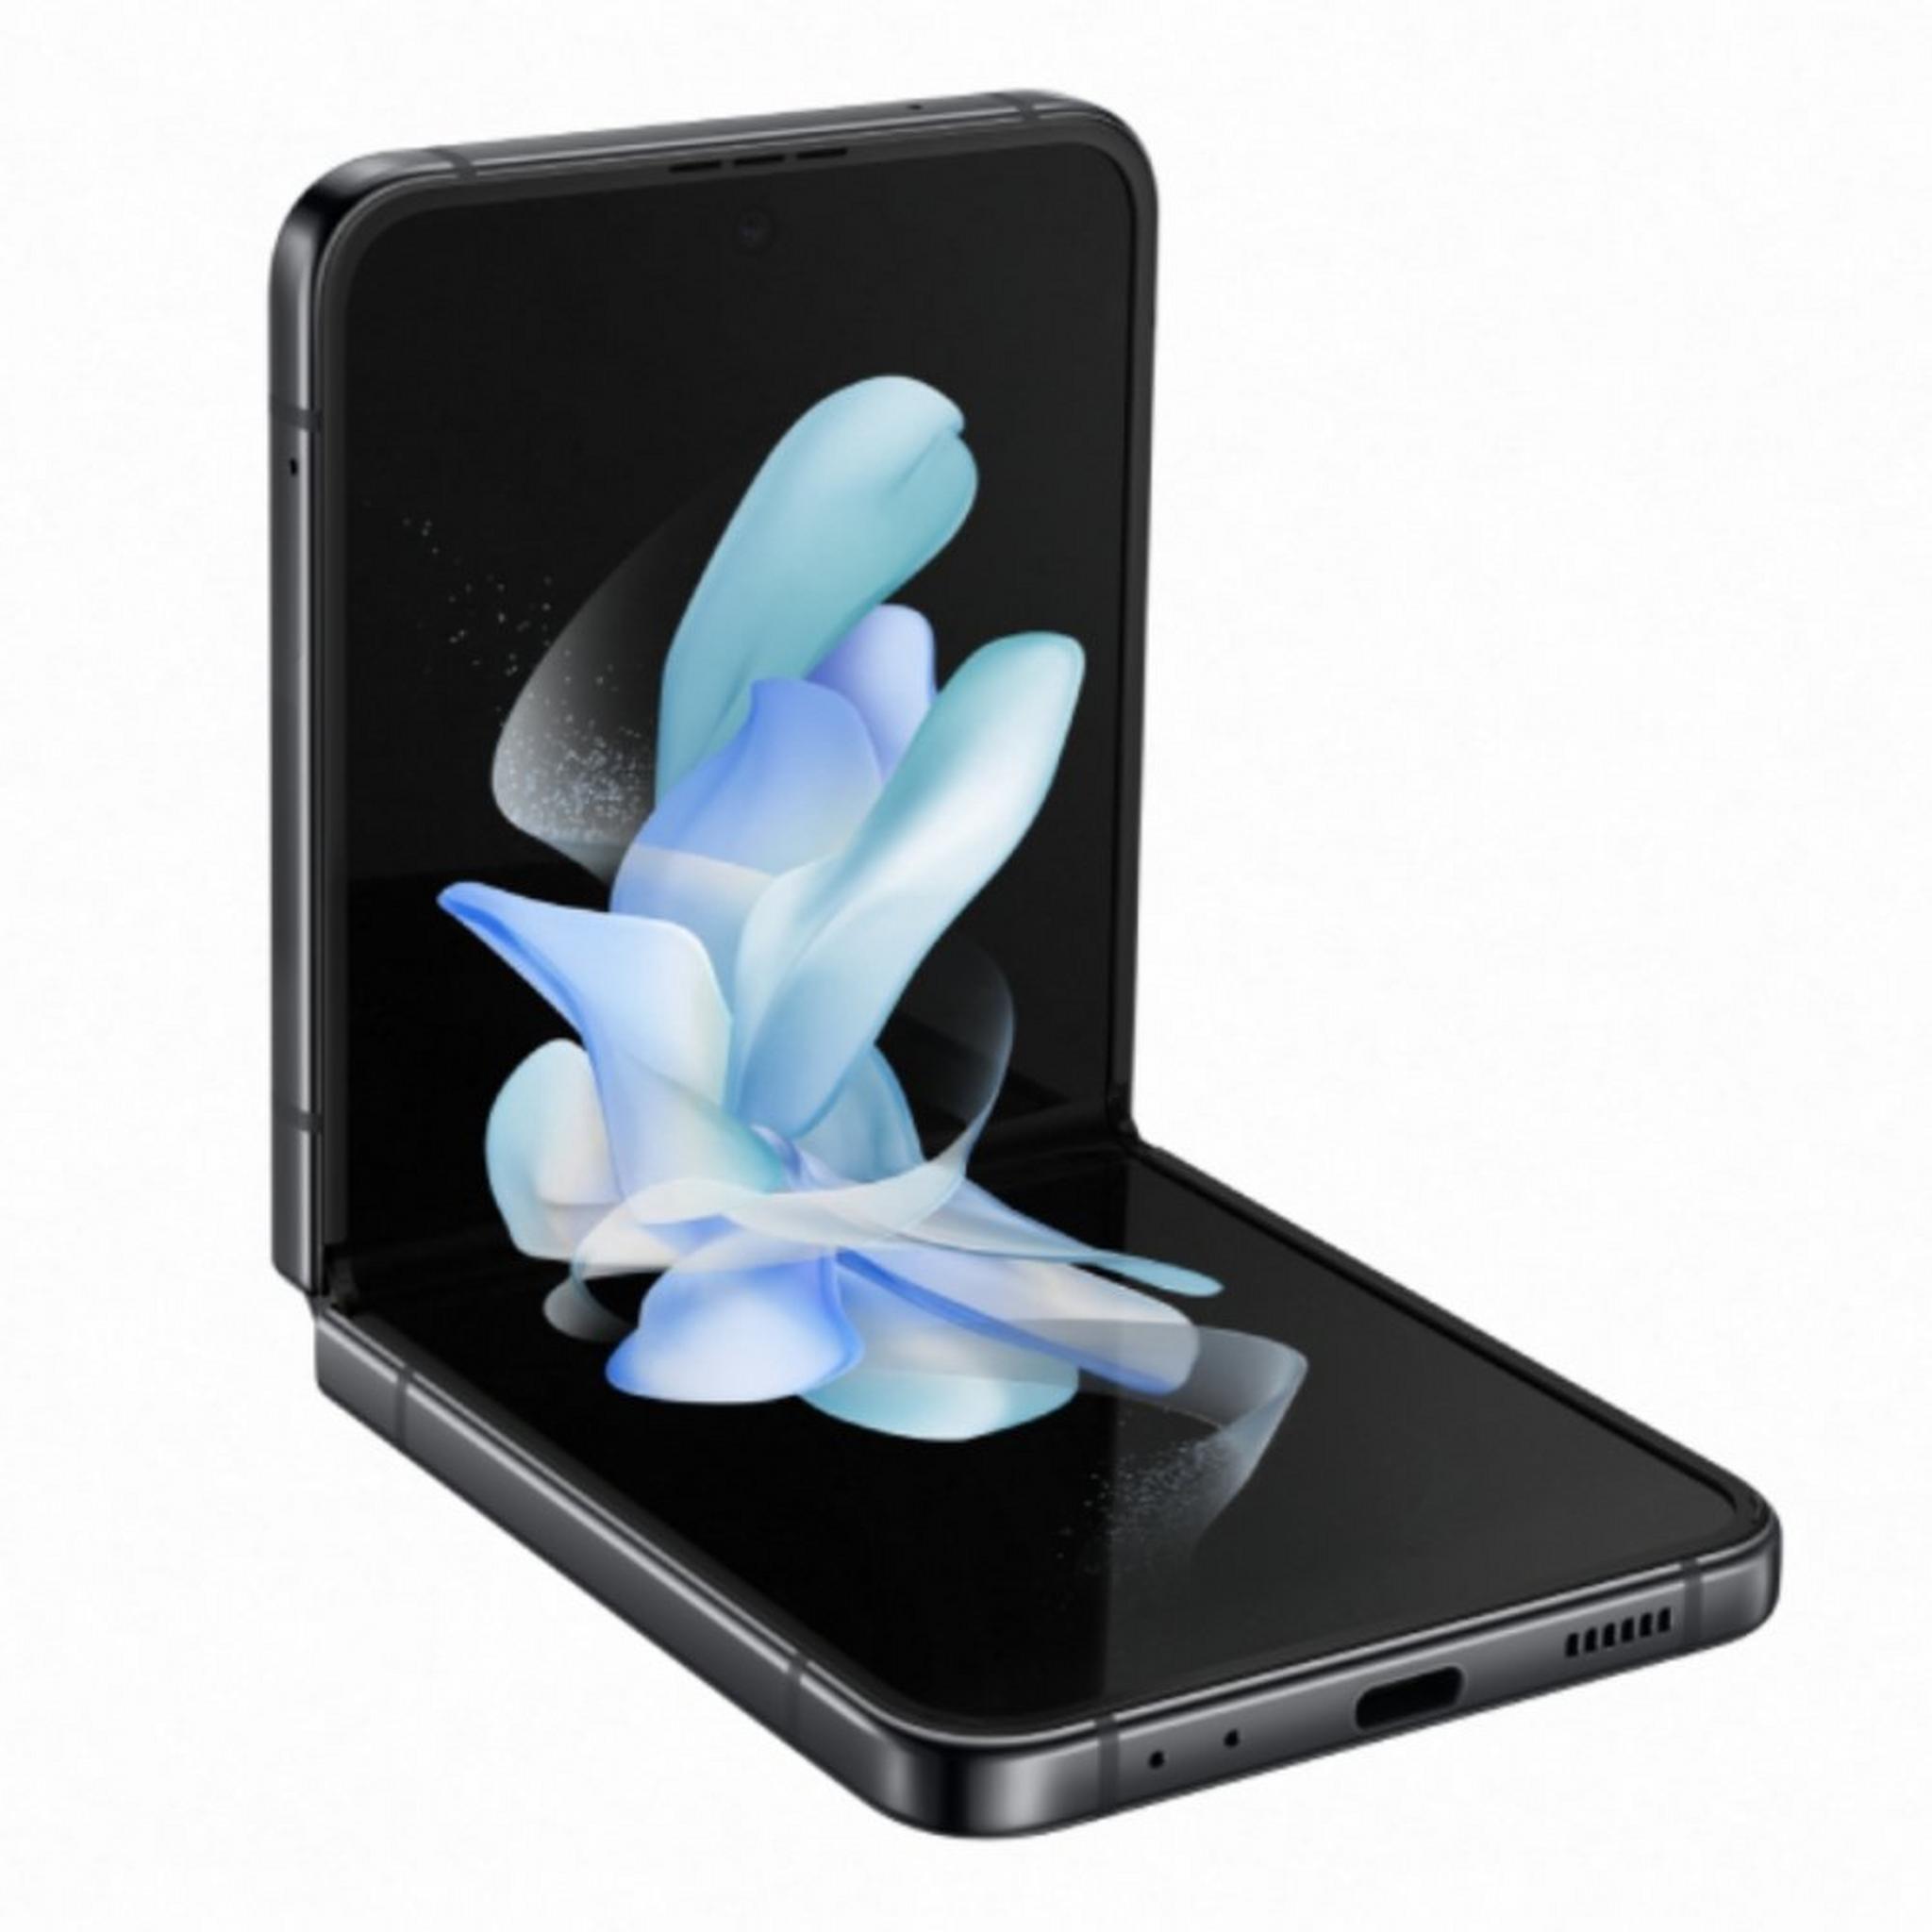 Samsung Galaxy Z Flip 4 5G 512GB Phone - Graphite